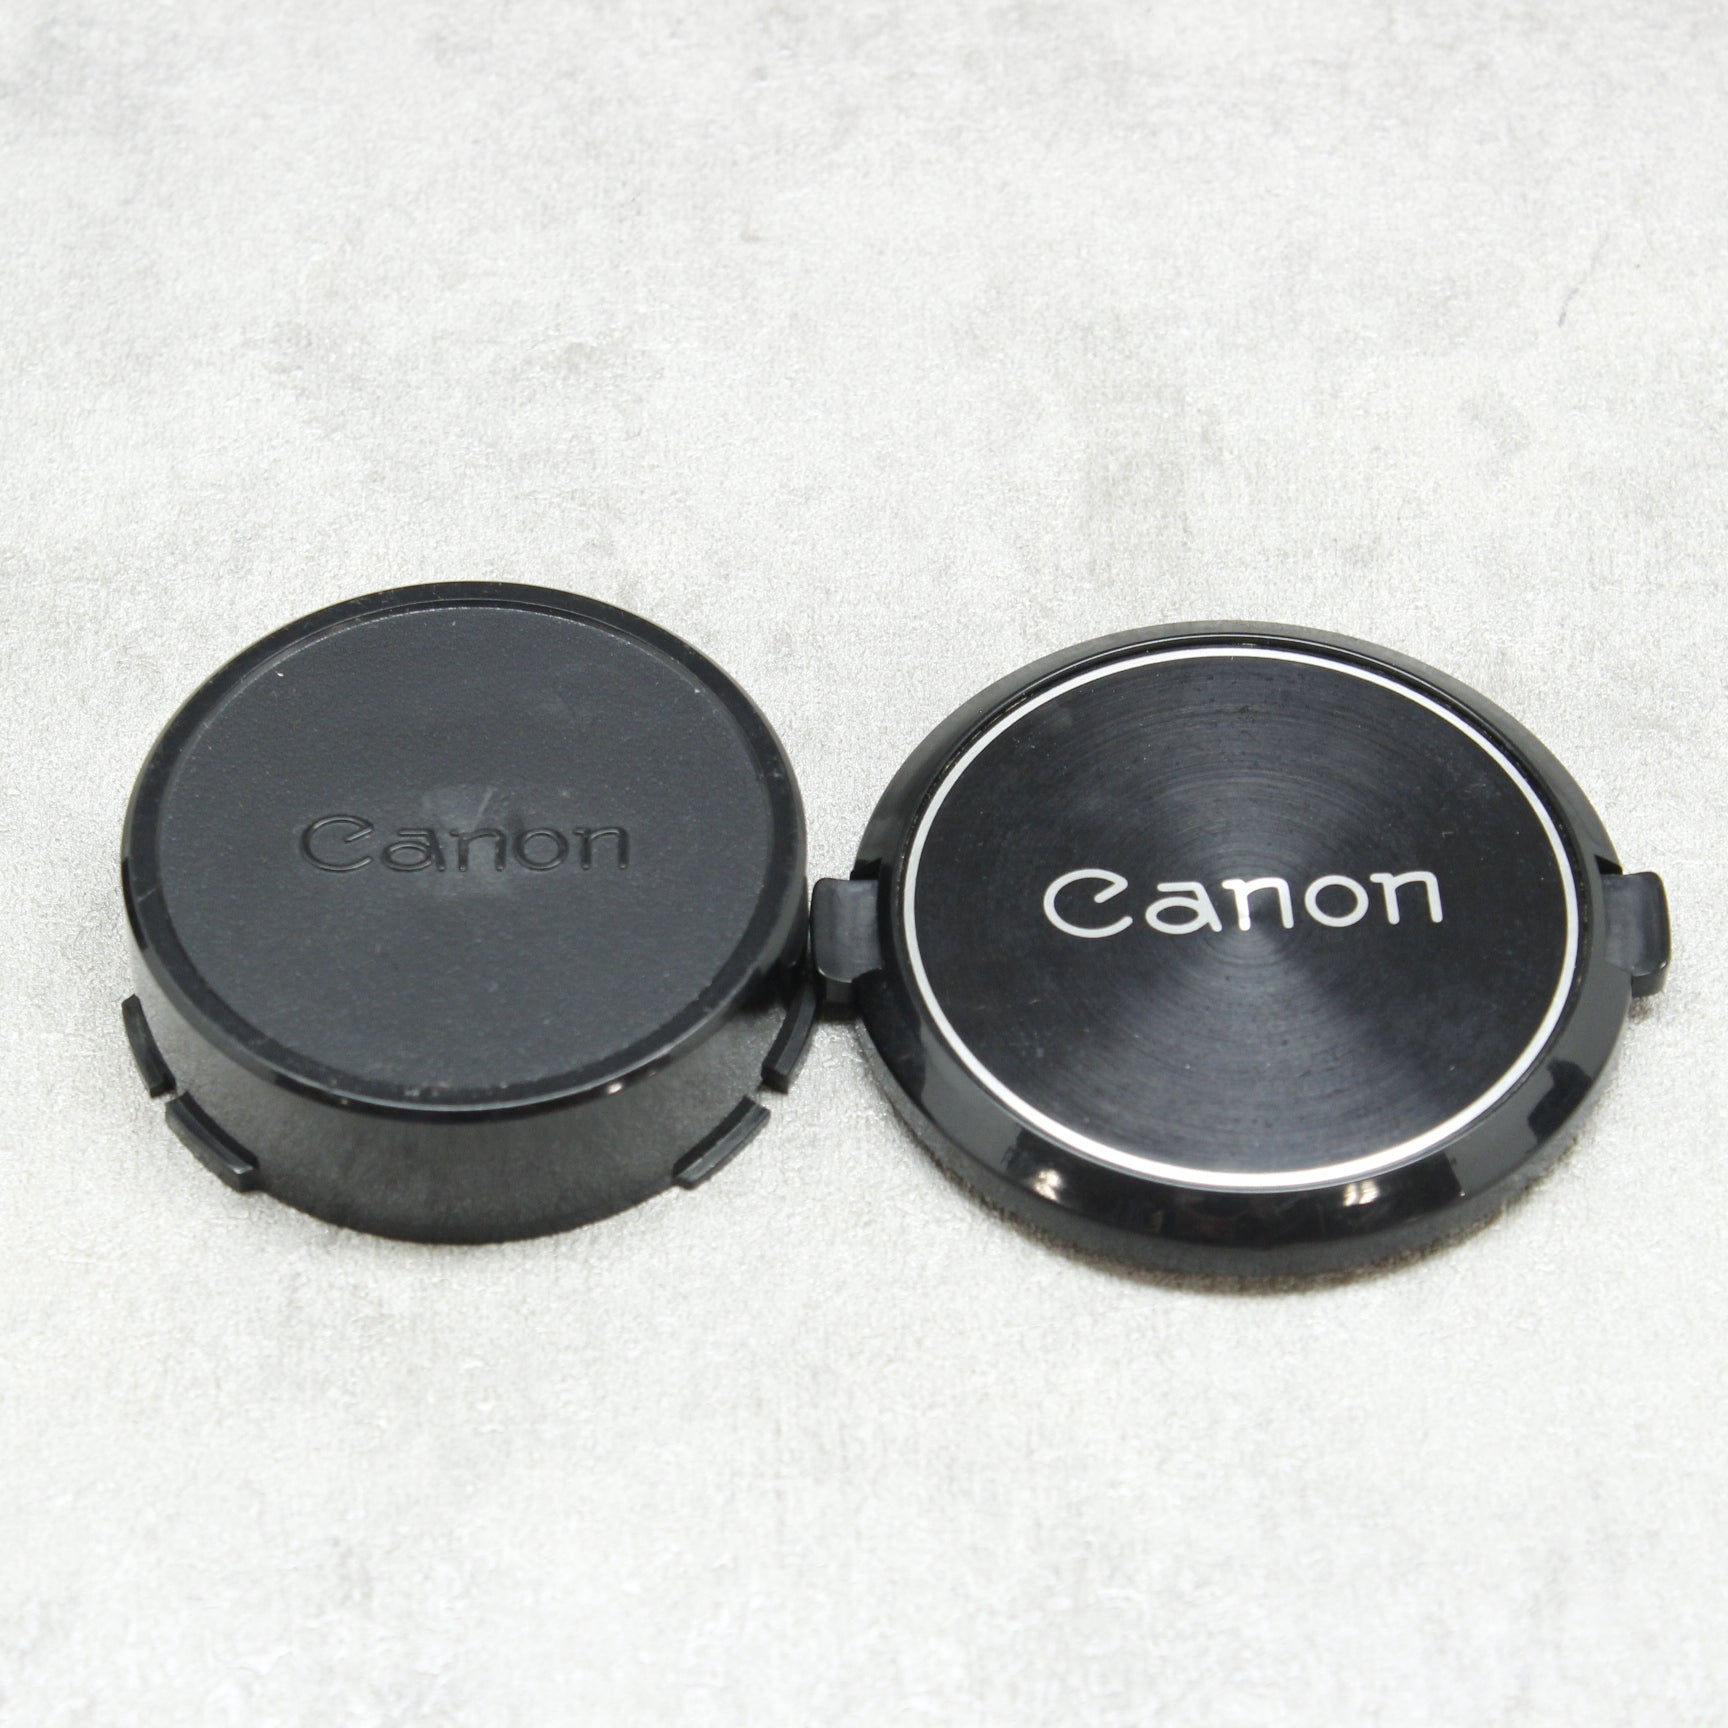 中古品 Canon FD 50mm F1.4 S.S.C 【4月2日(日)のYouTube生配信でご紹介】